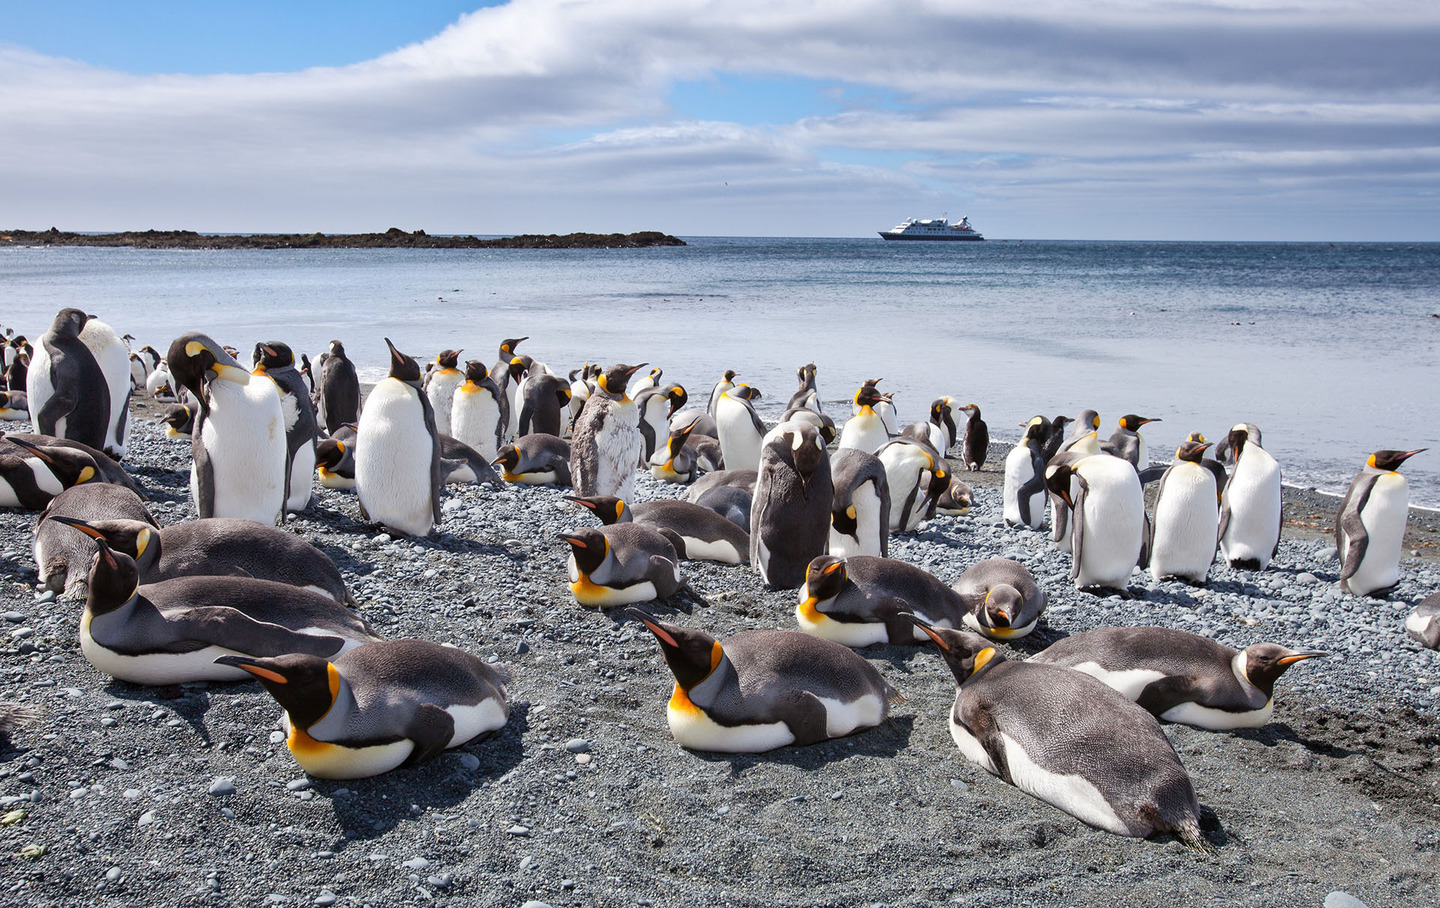 Penguin Island's penguins in battle for survival against climate change, human threats